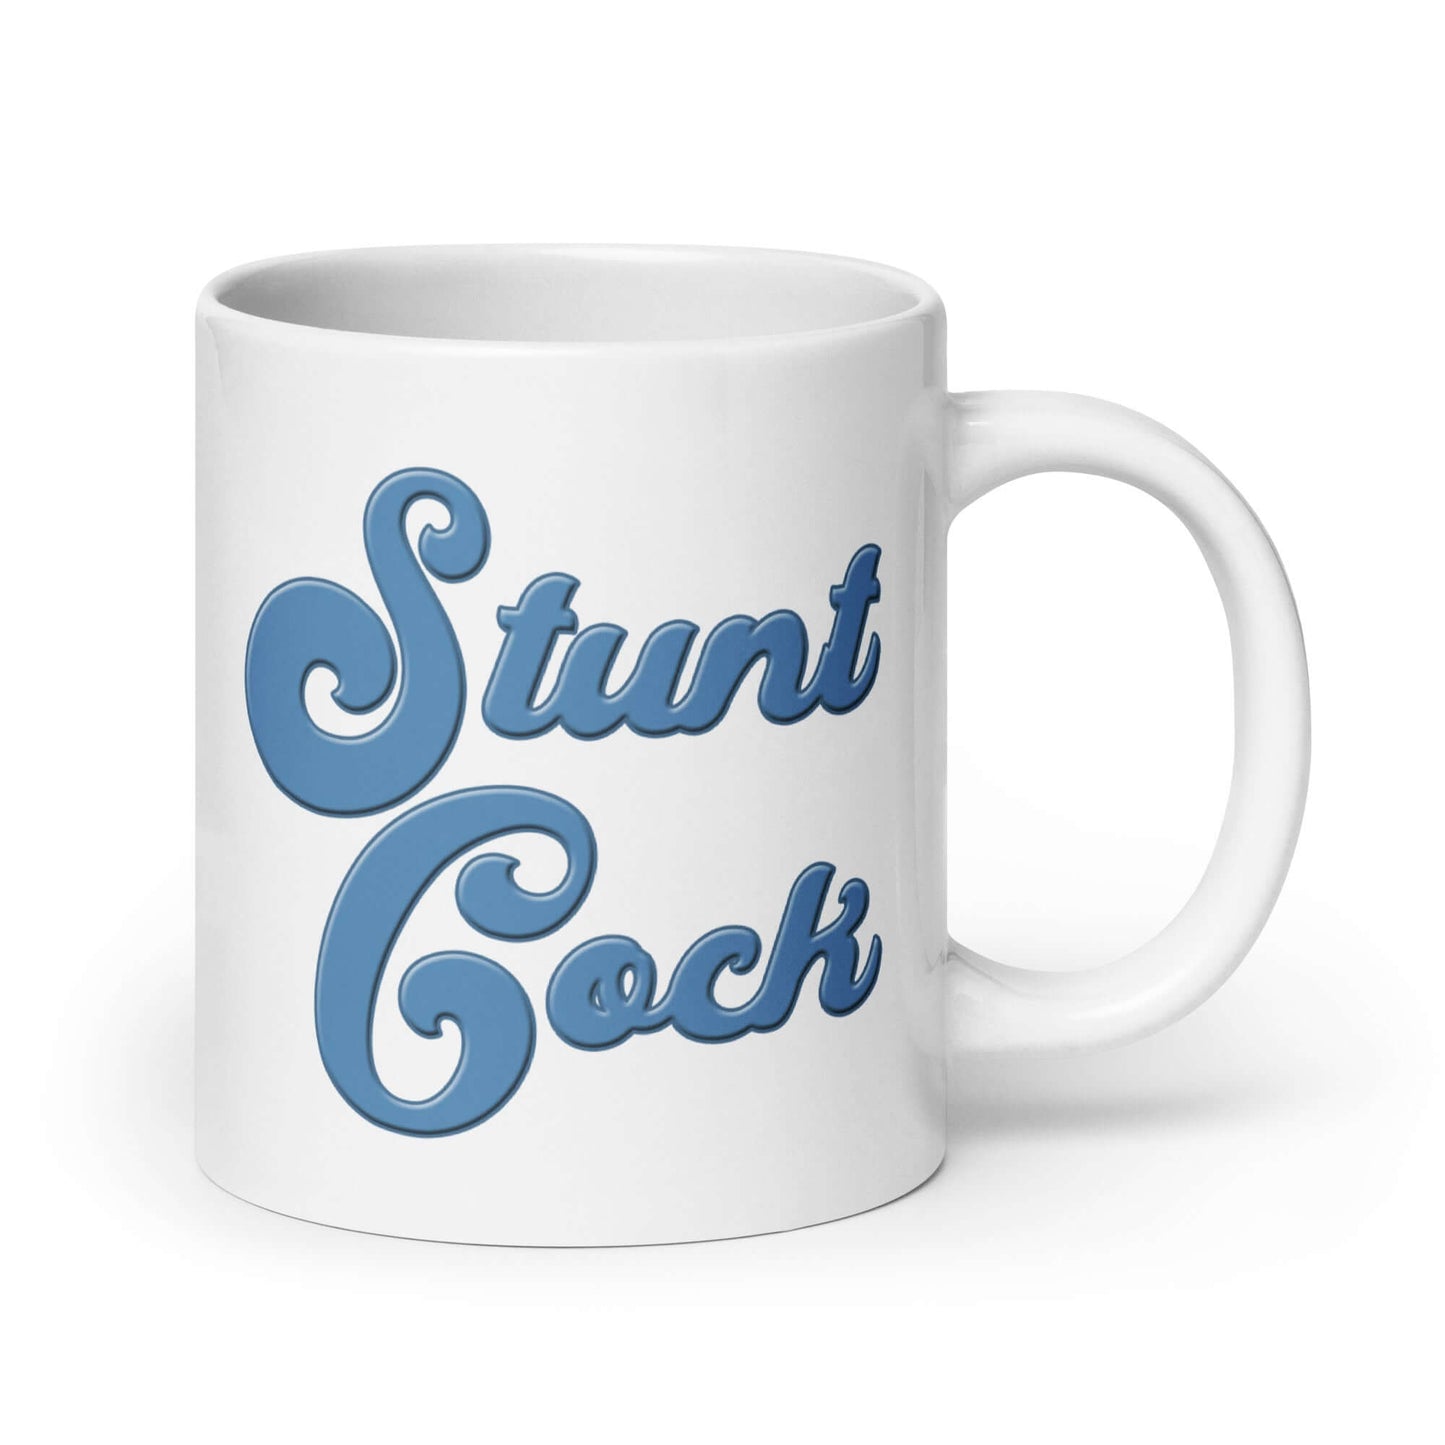 Stunt cock ceramic coffee mug